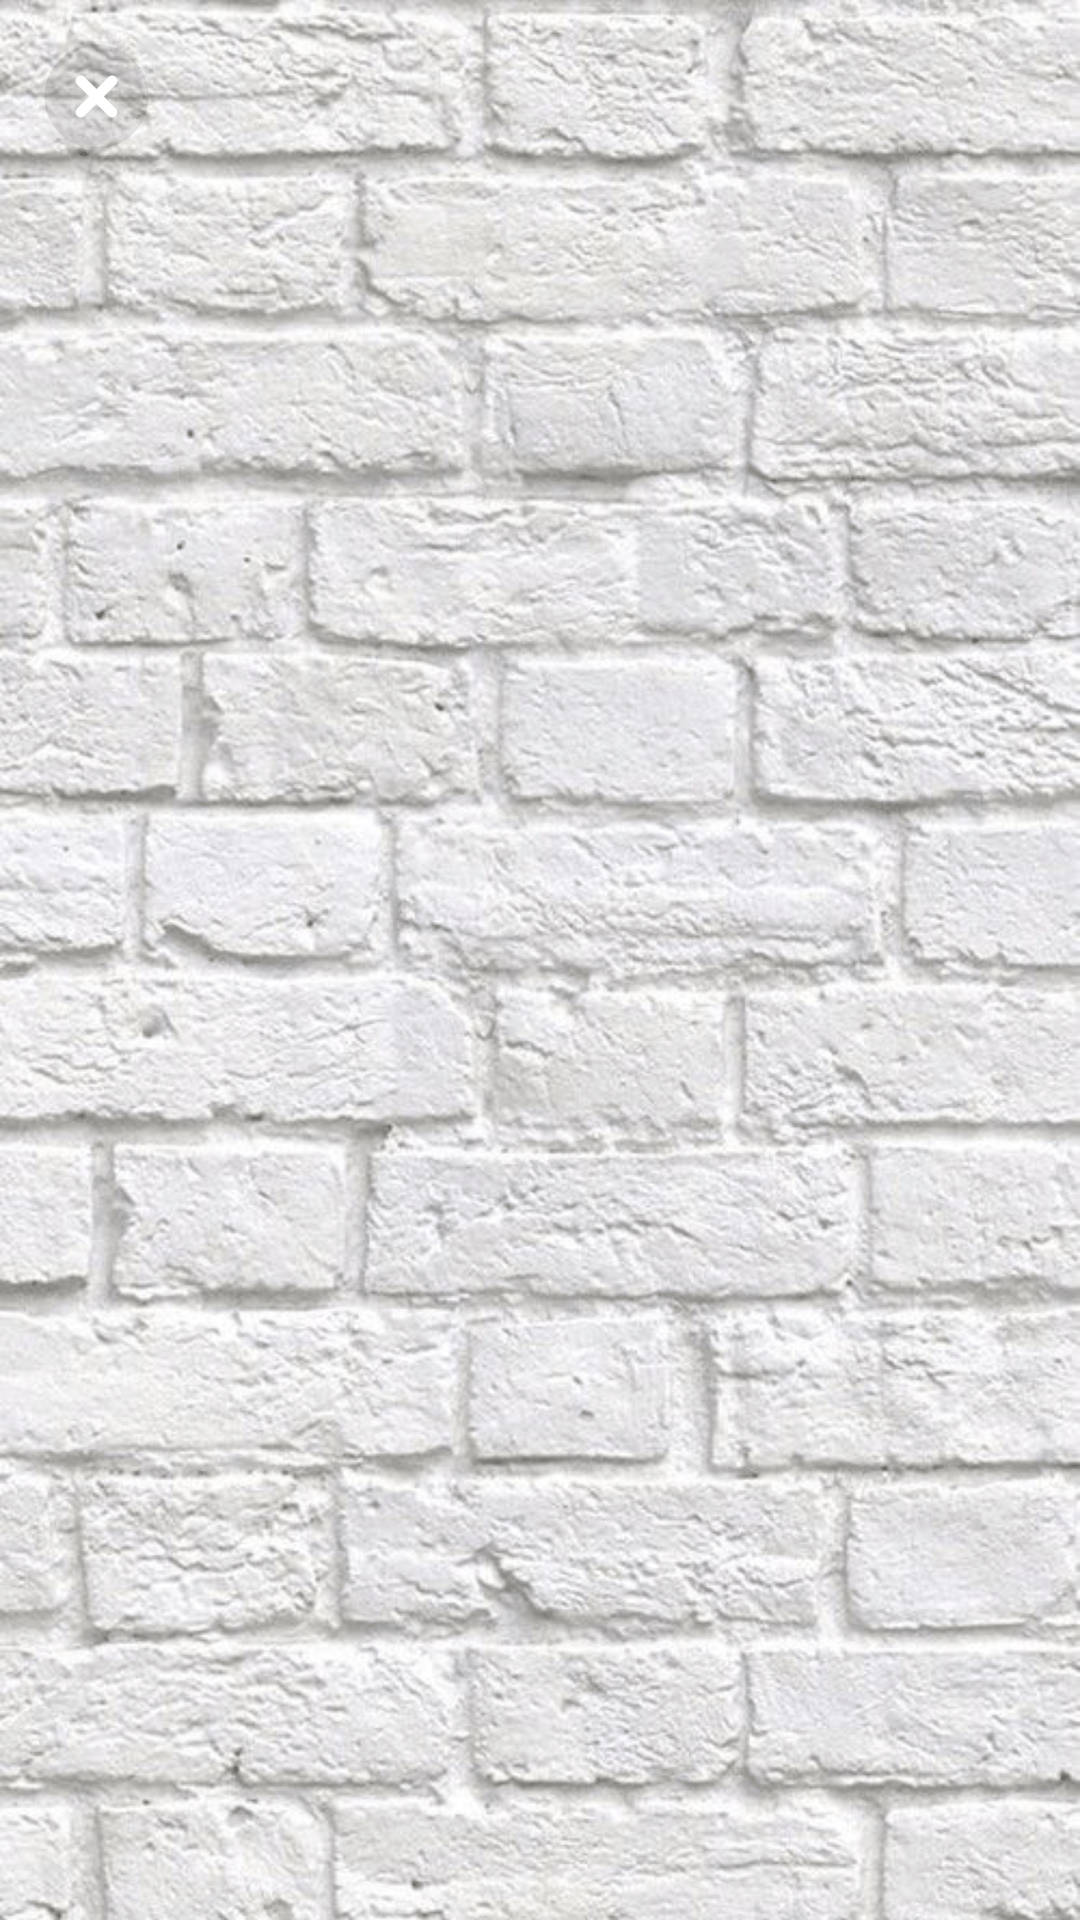 Plain White Brick Wall Wallpaper